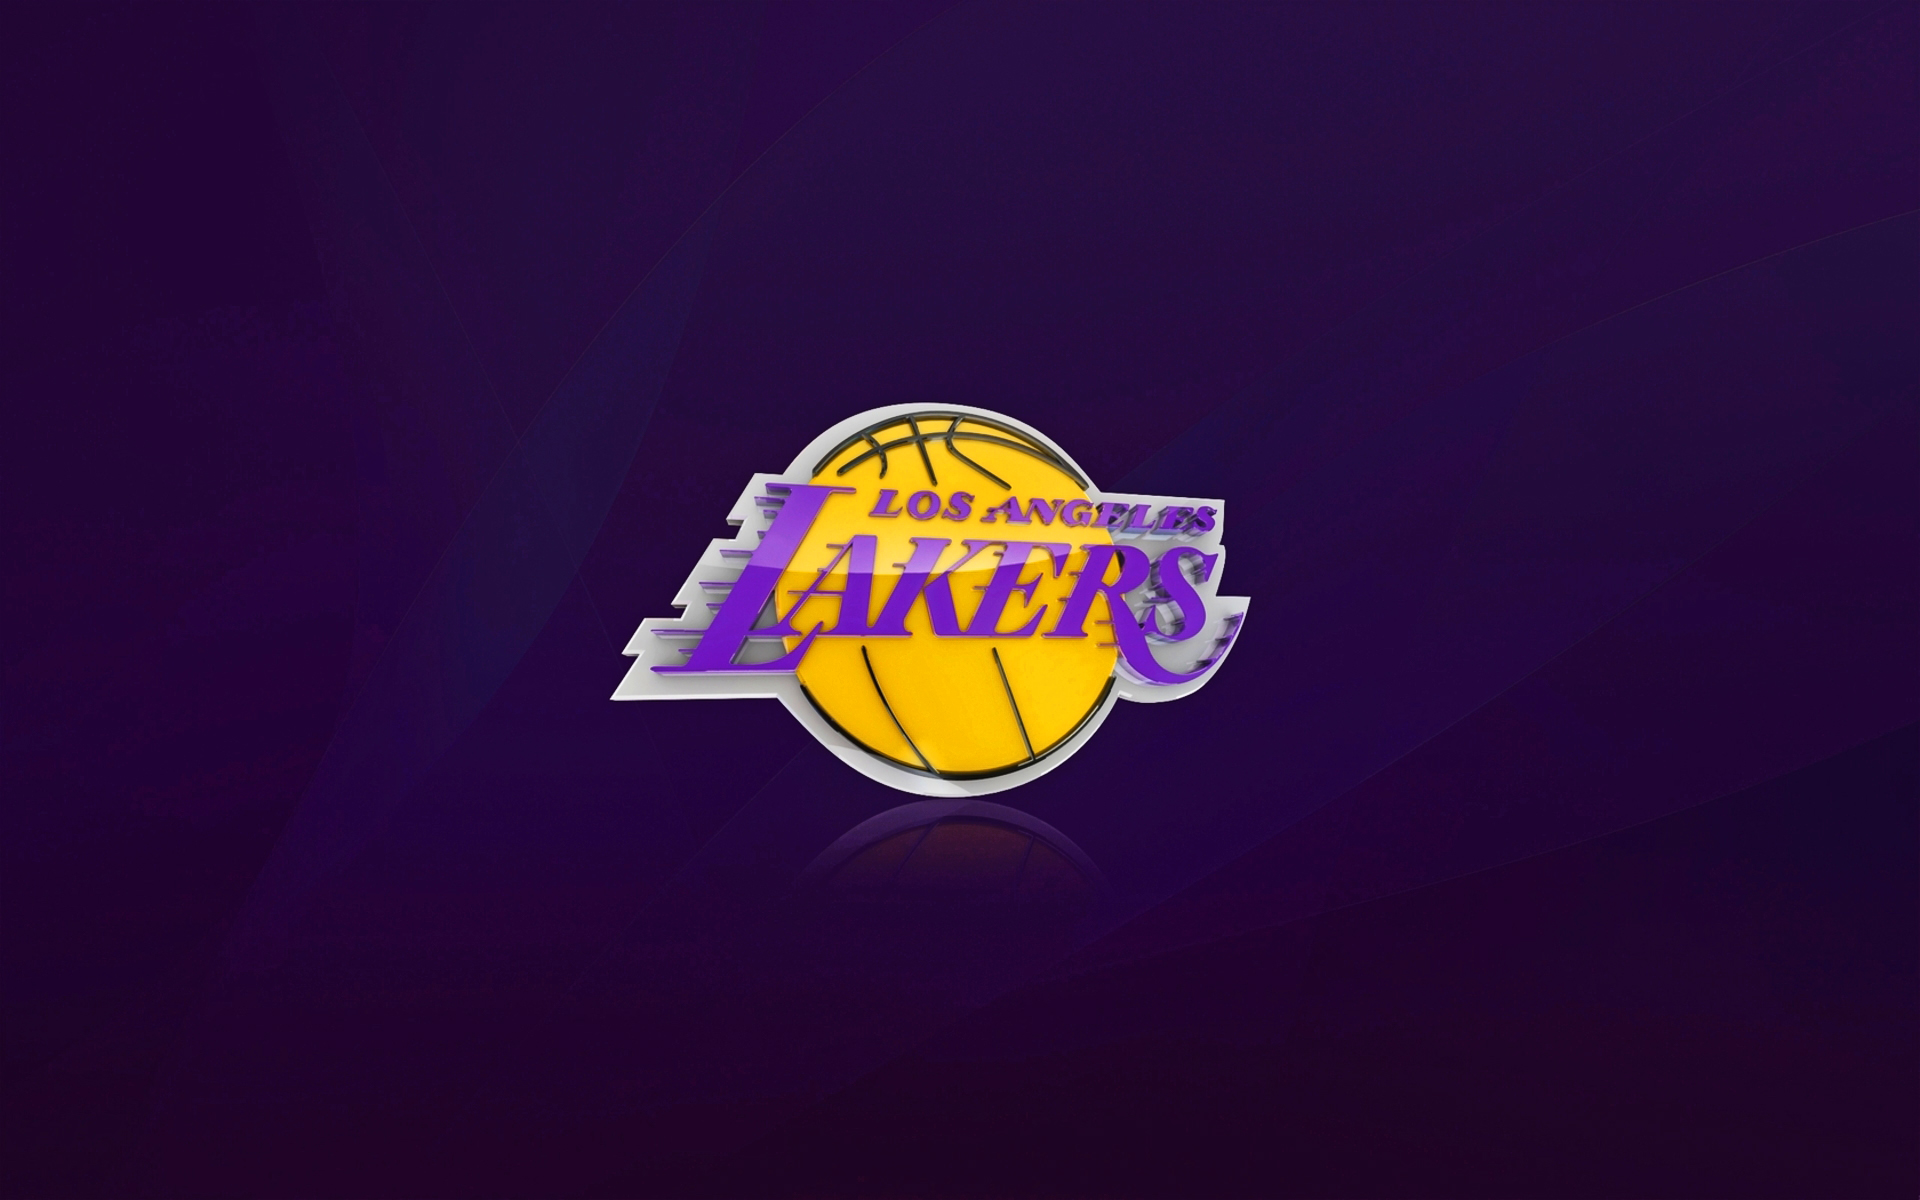 Los Angeles Lakers wallpaper 1920x1200 73337